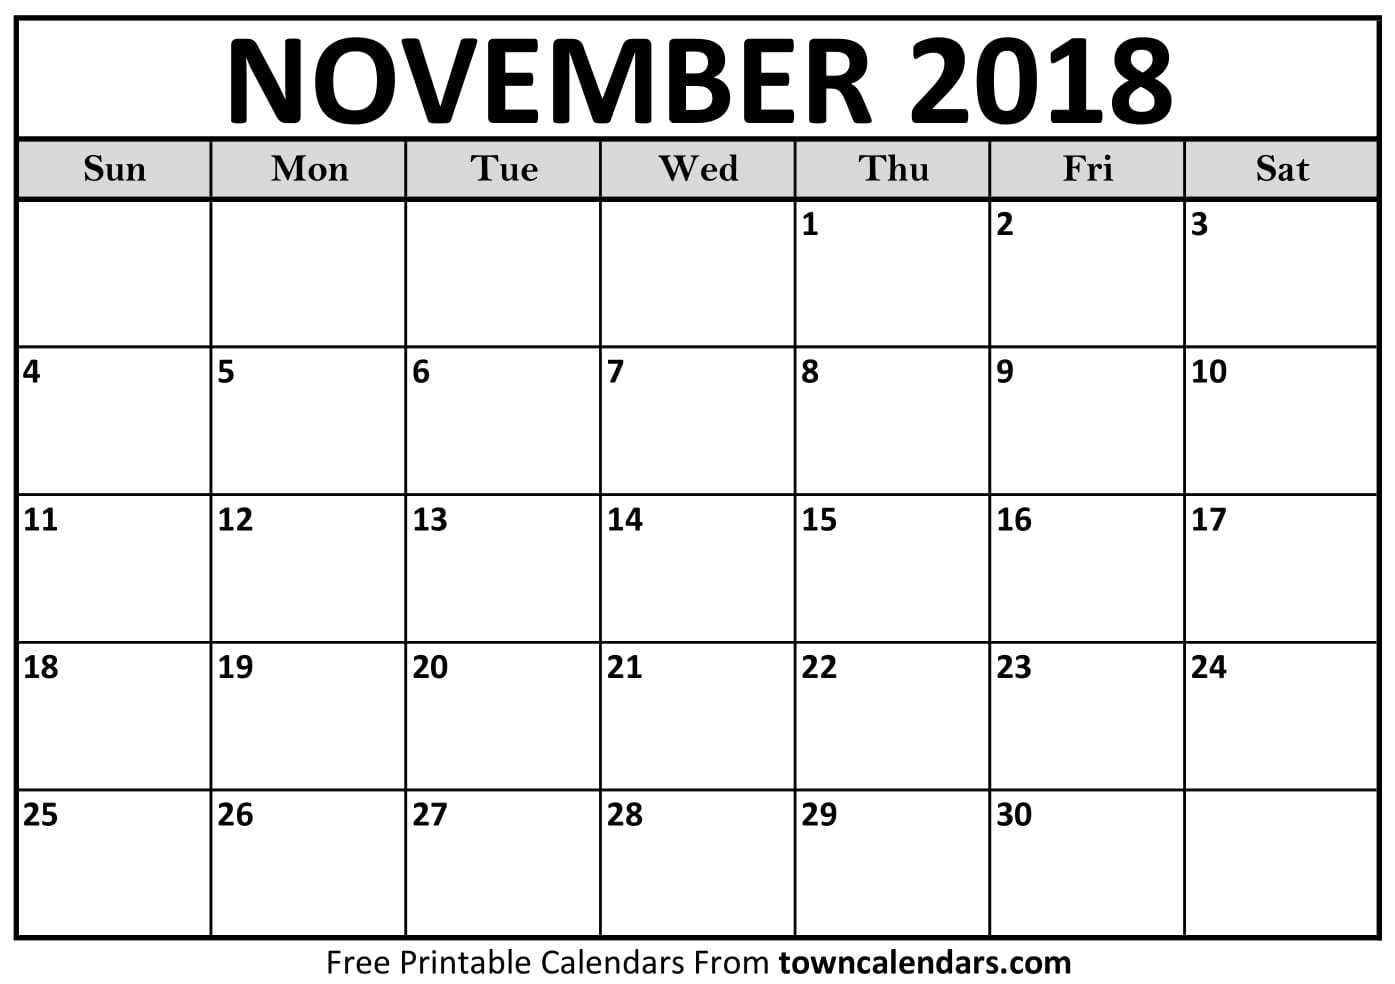 Blank November 2018 Calendar With Notes